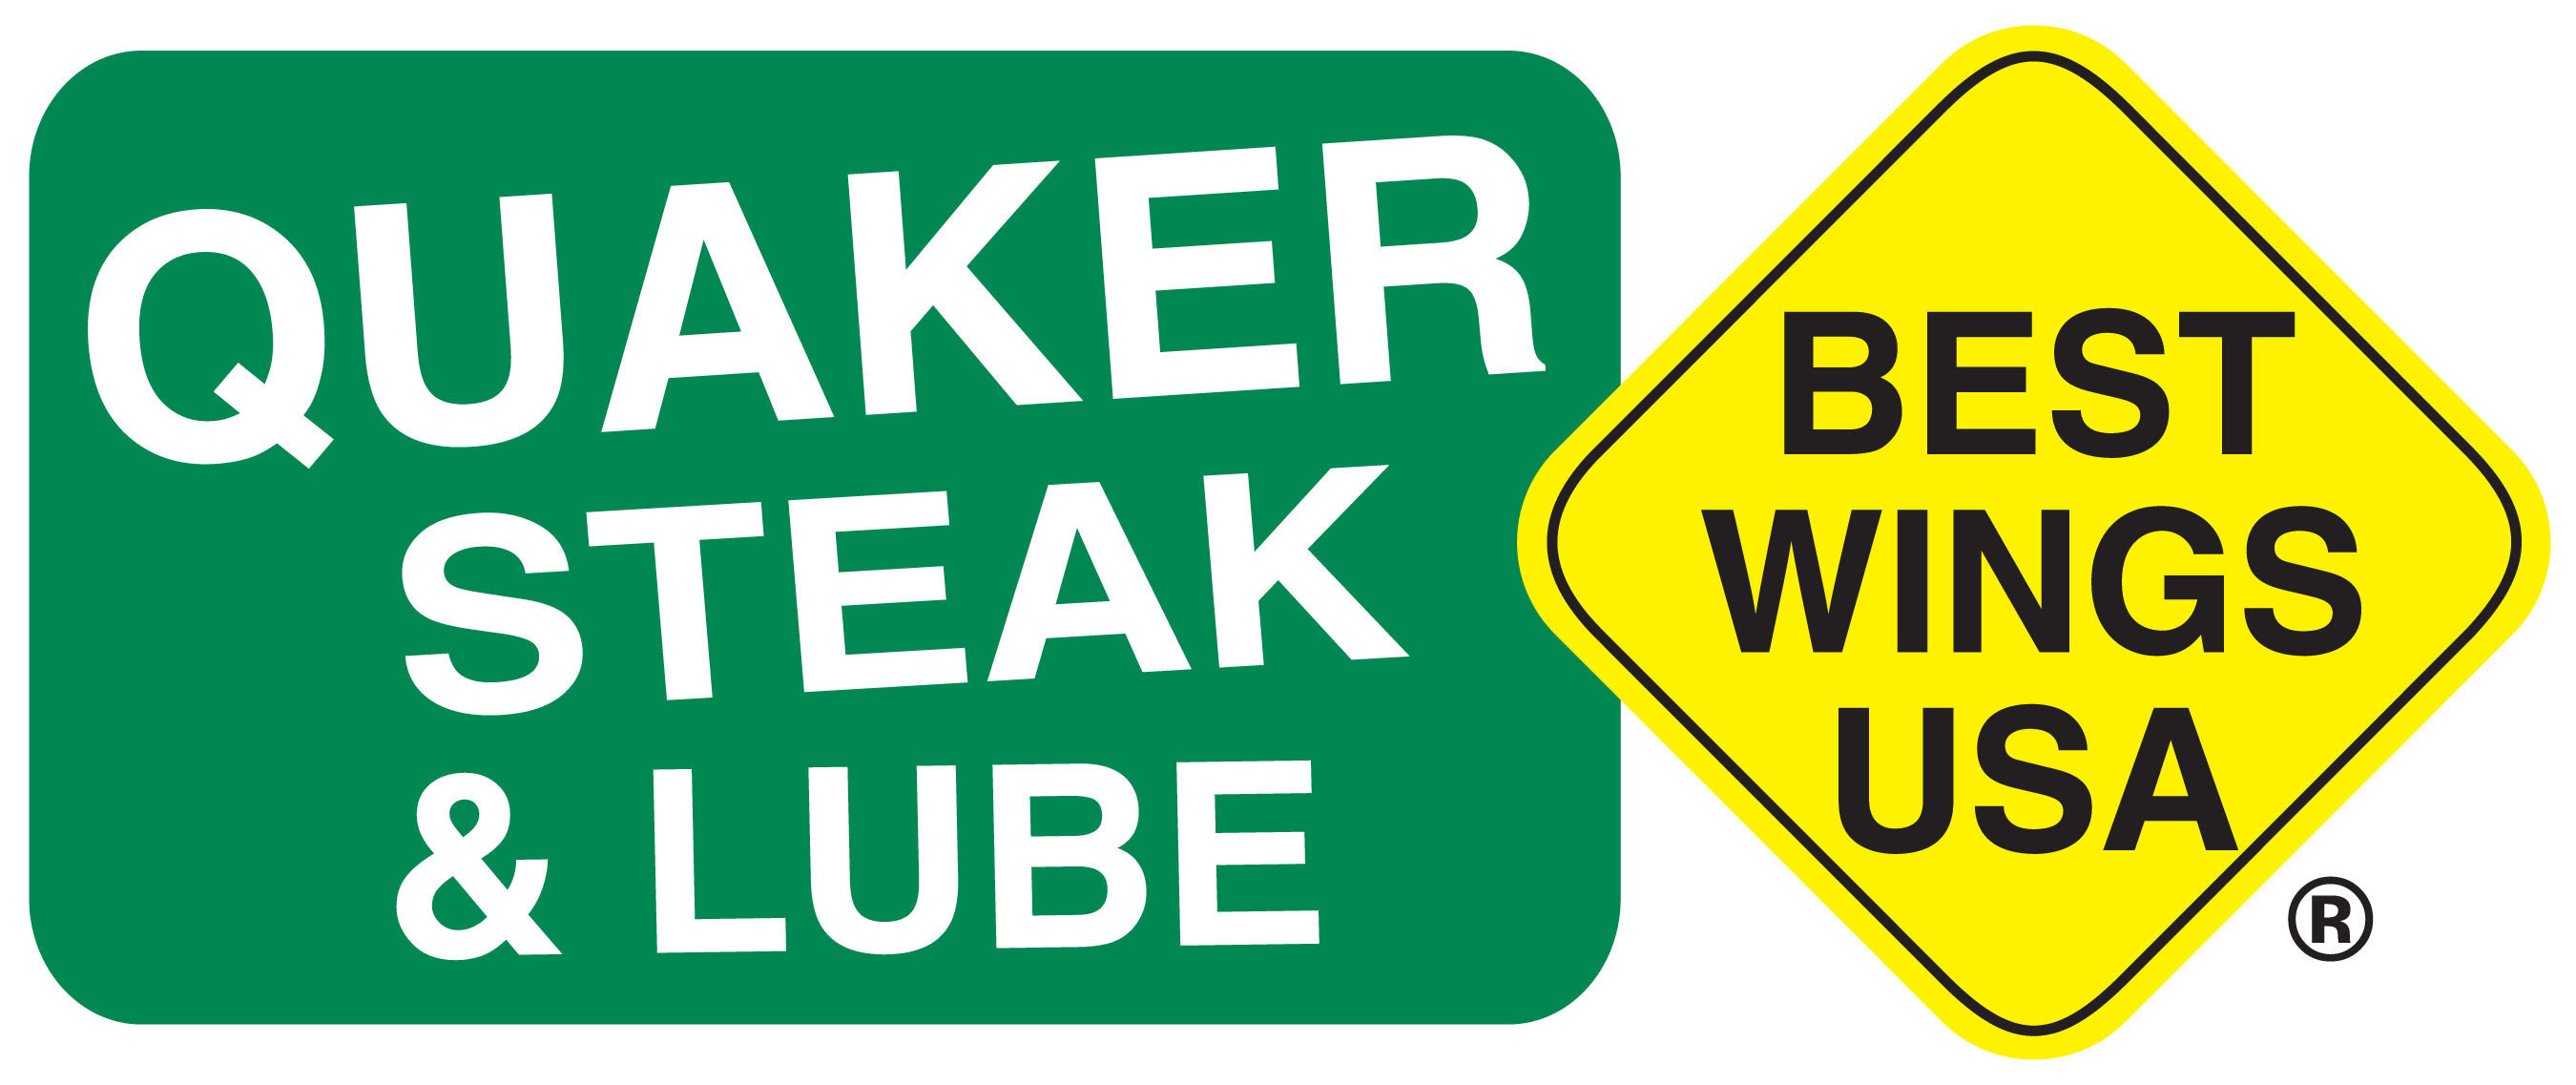 Quaker Steak & Lube company logo. (PRNewsFoto/Quaker Steak & Lube) (PRNewsFoto/)